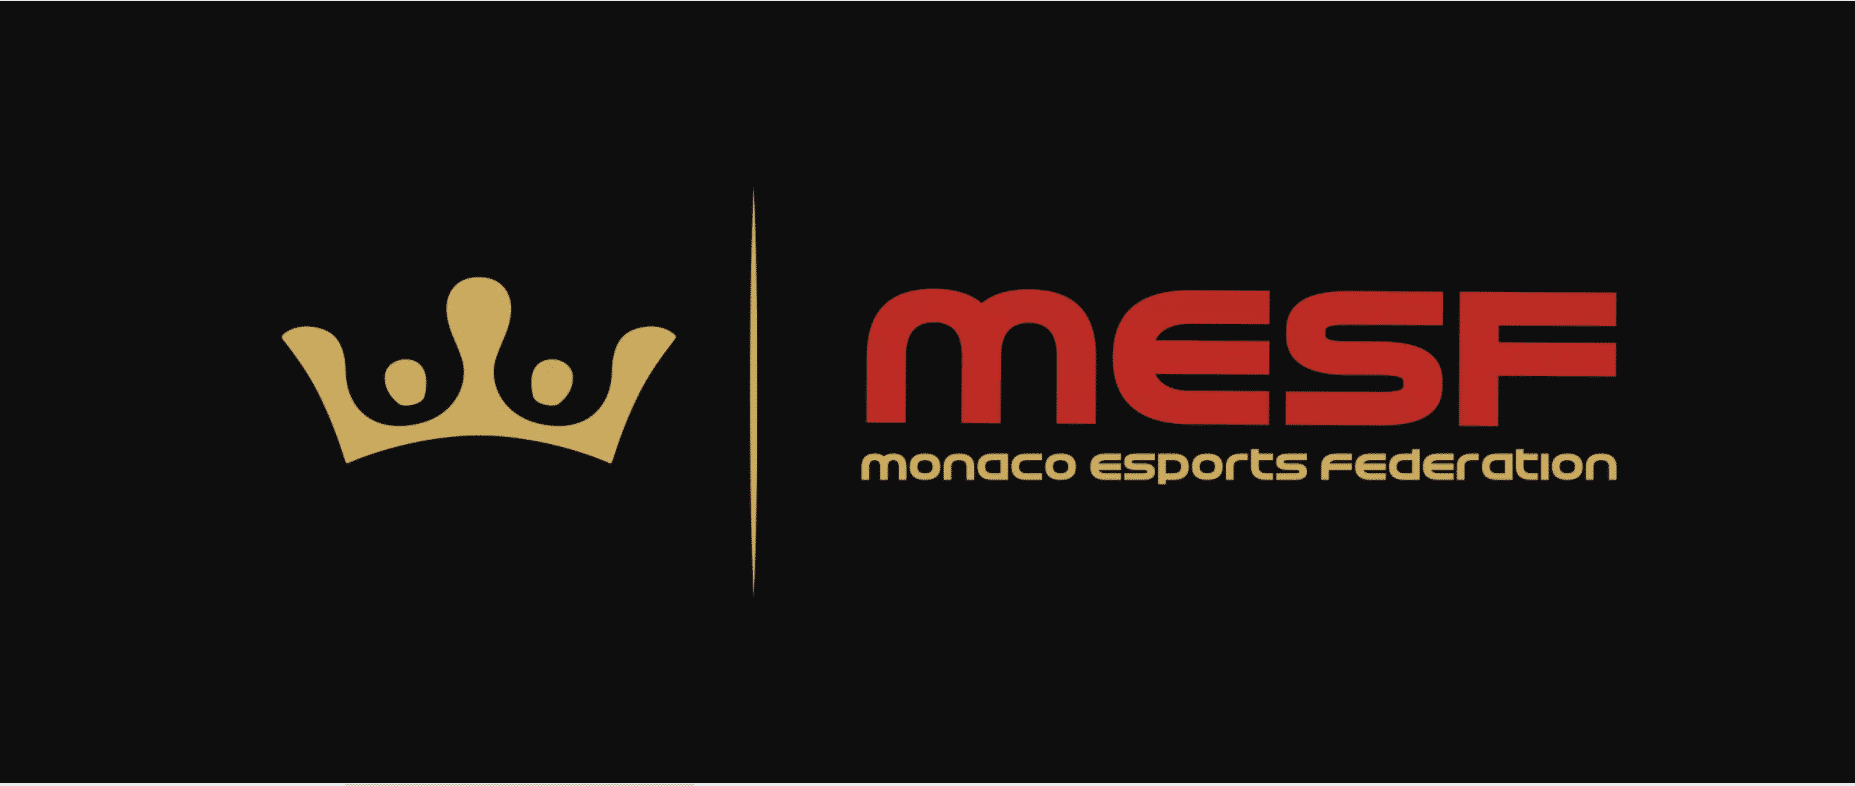 Monaco Gaming Show eSport